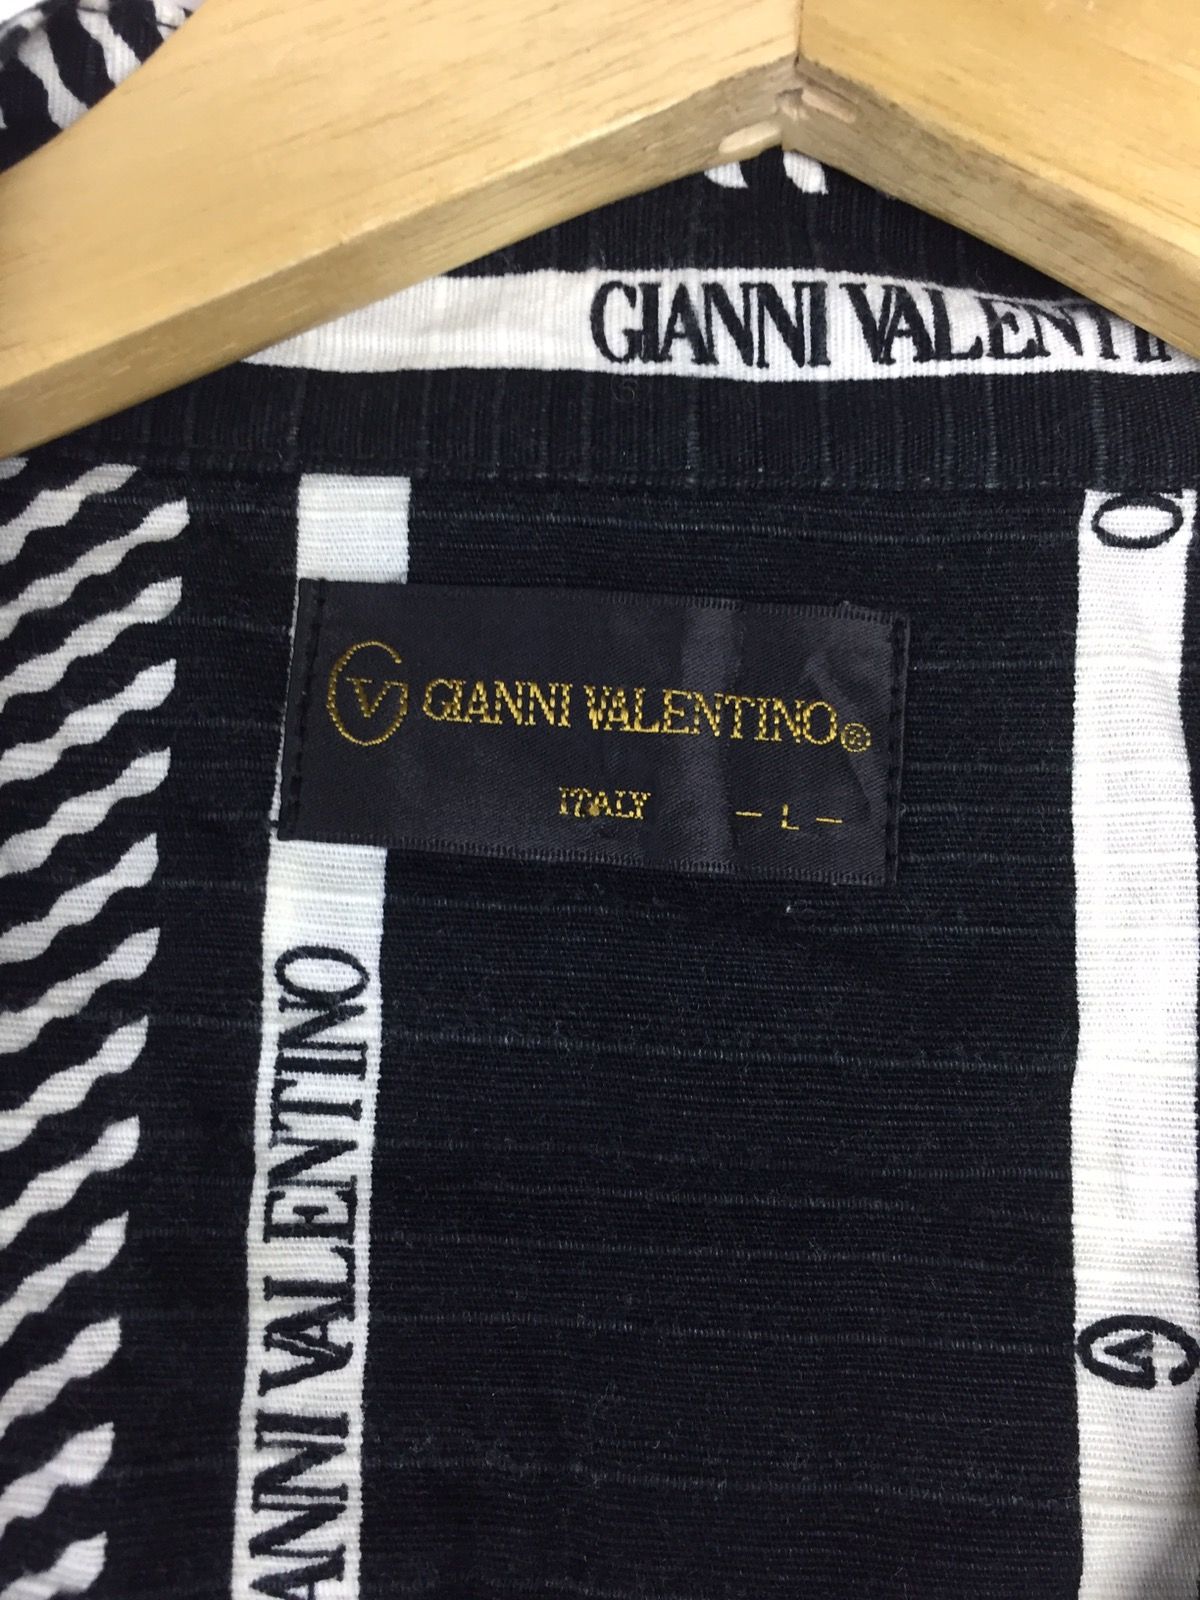 Gianni Valentino Italy Sunjuro Hemp Jerami Kimono Jacket - 10